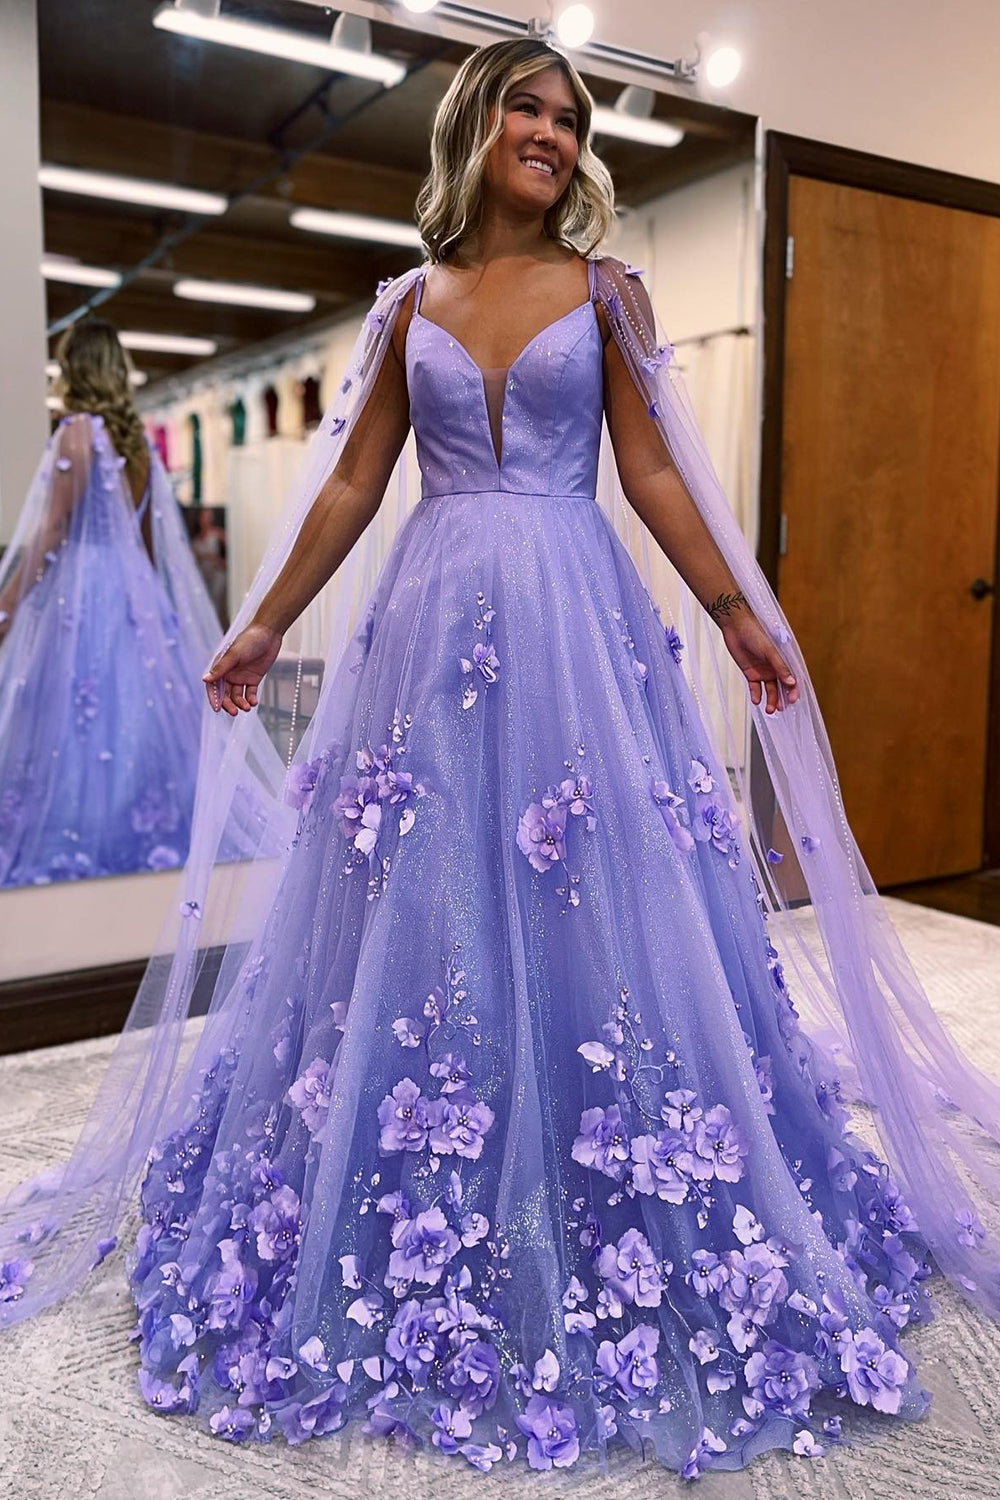 Emiliana Royal Blue Strapless Dress – Elegant Corset Gown with Slit, KissProm